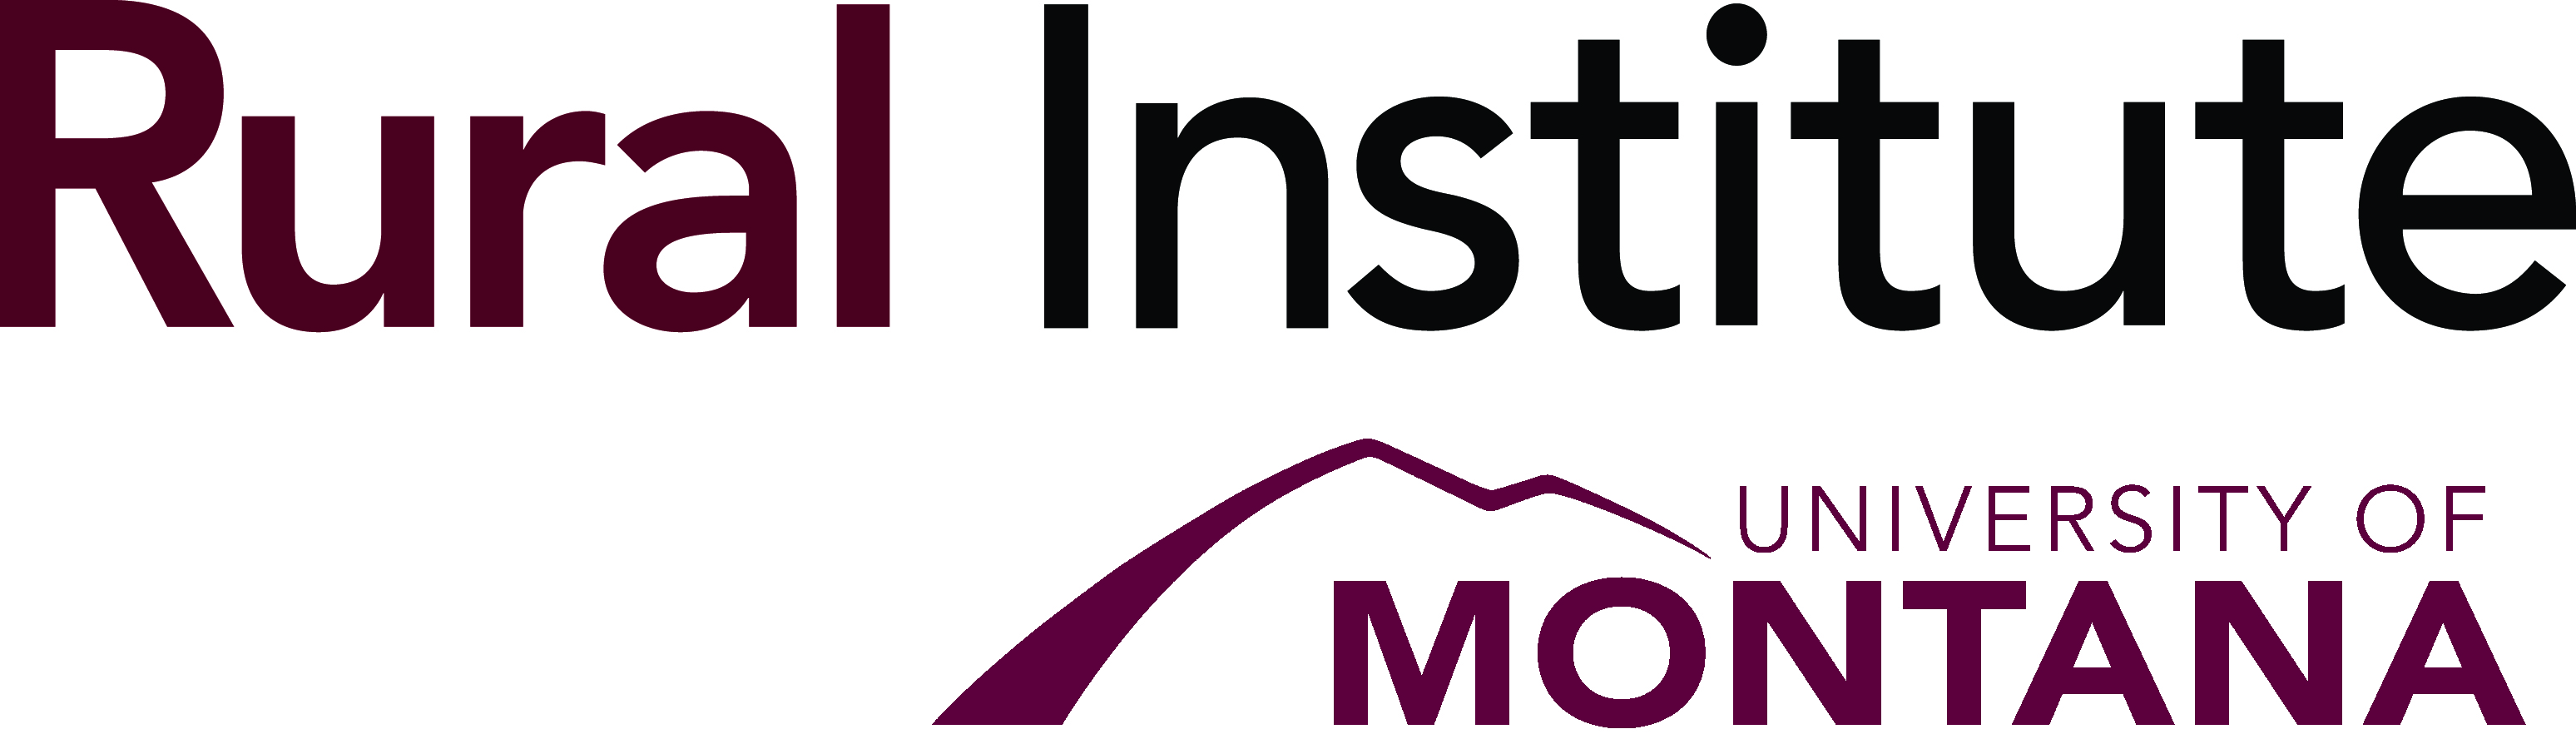 rural institute university of montana logo